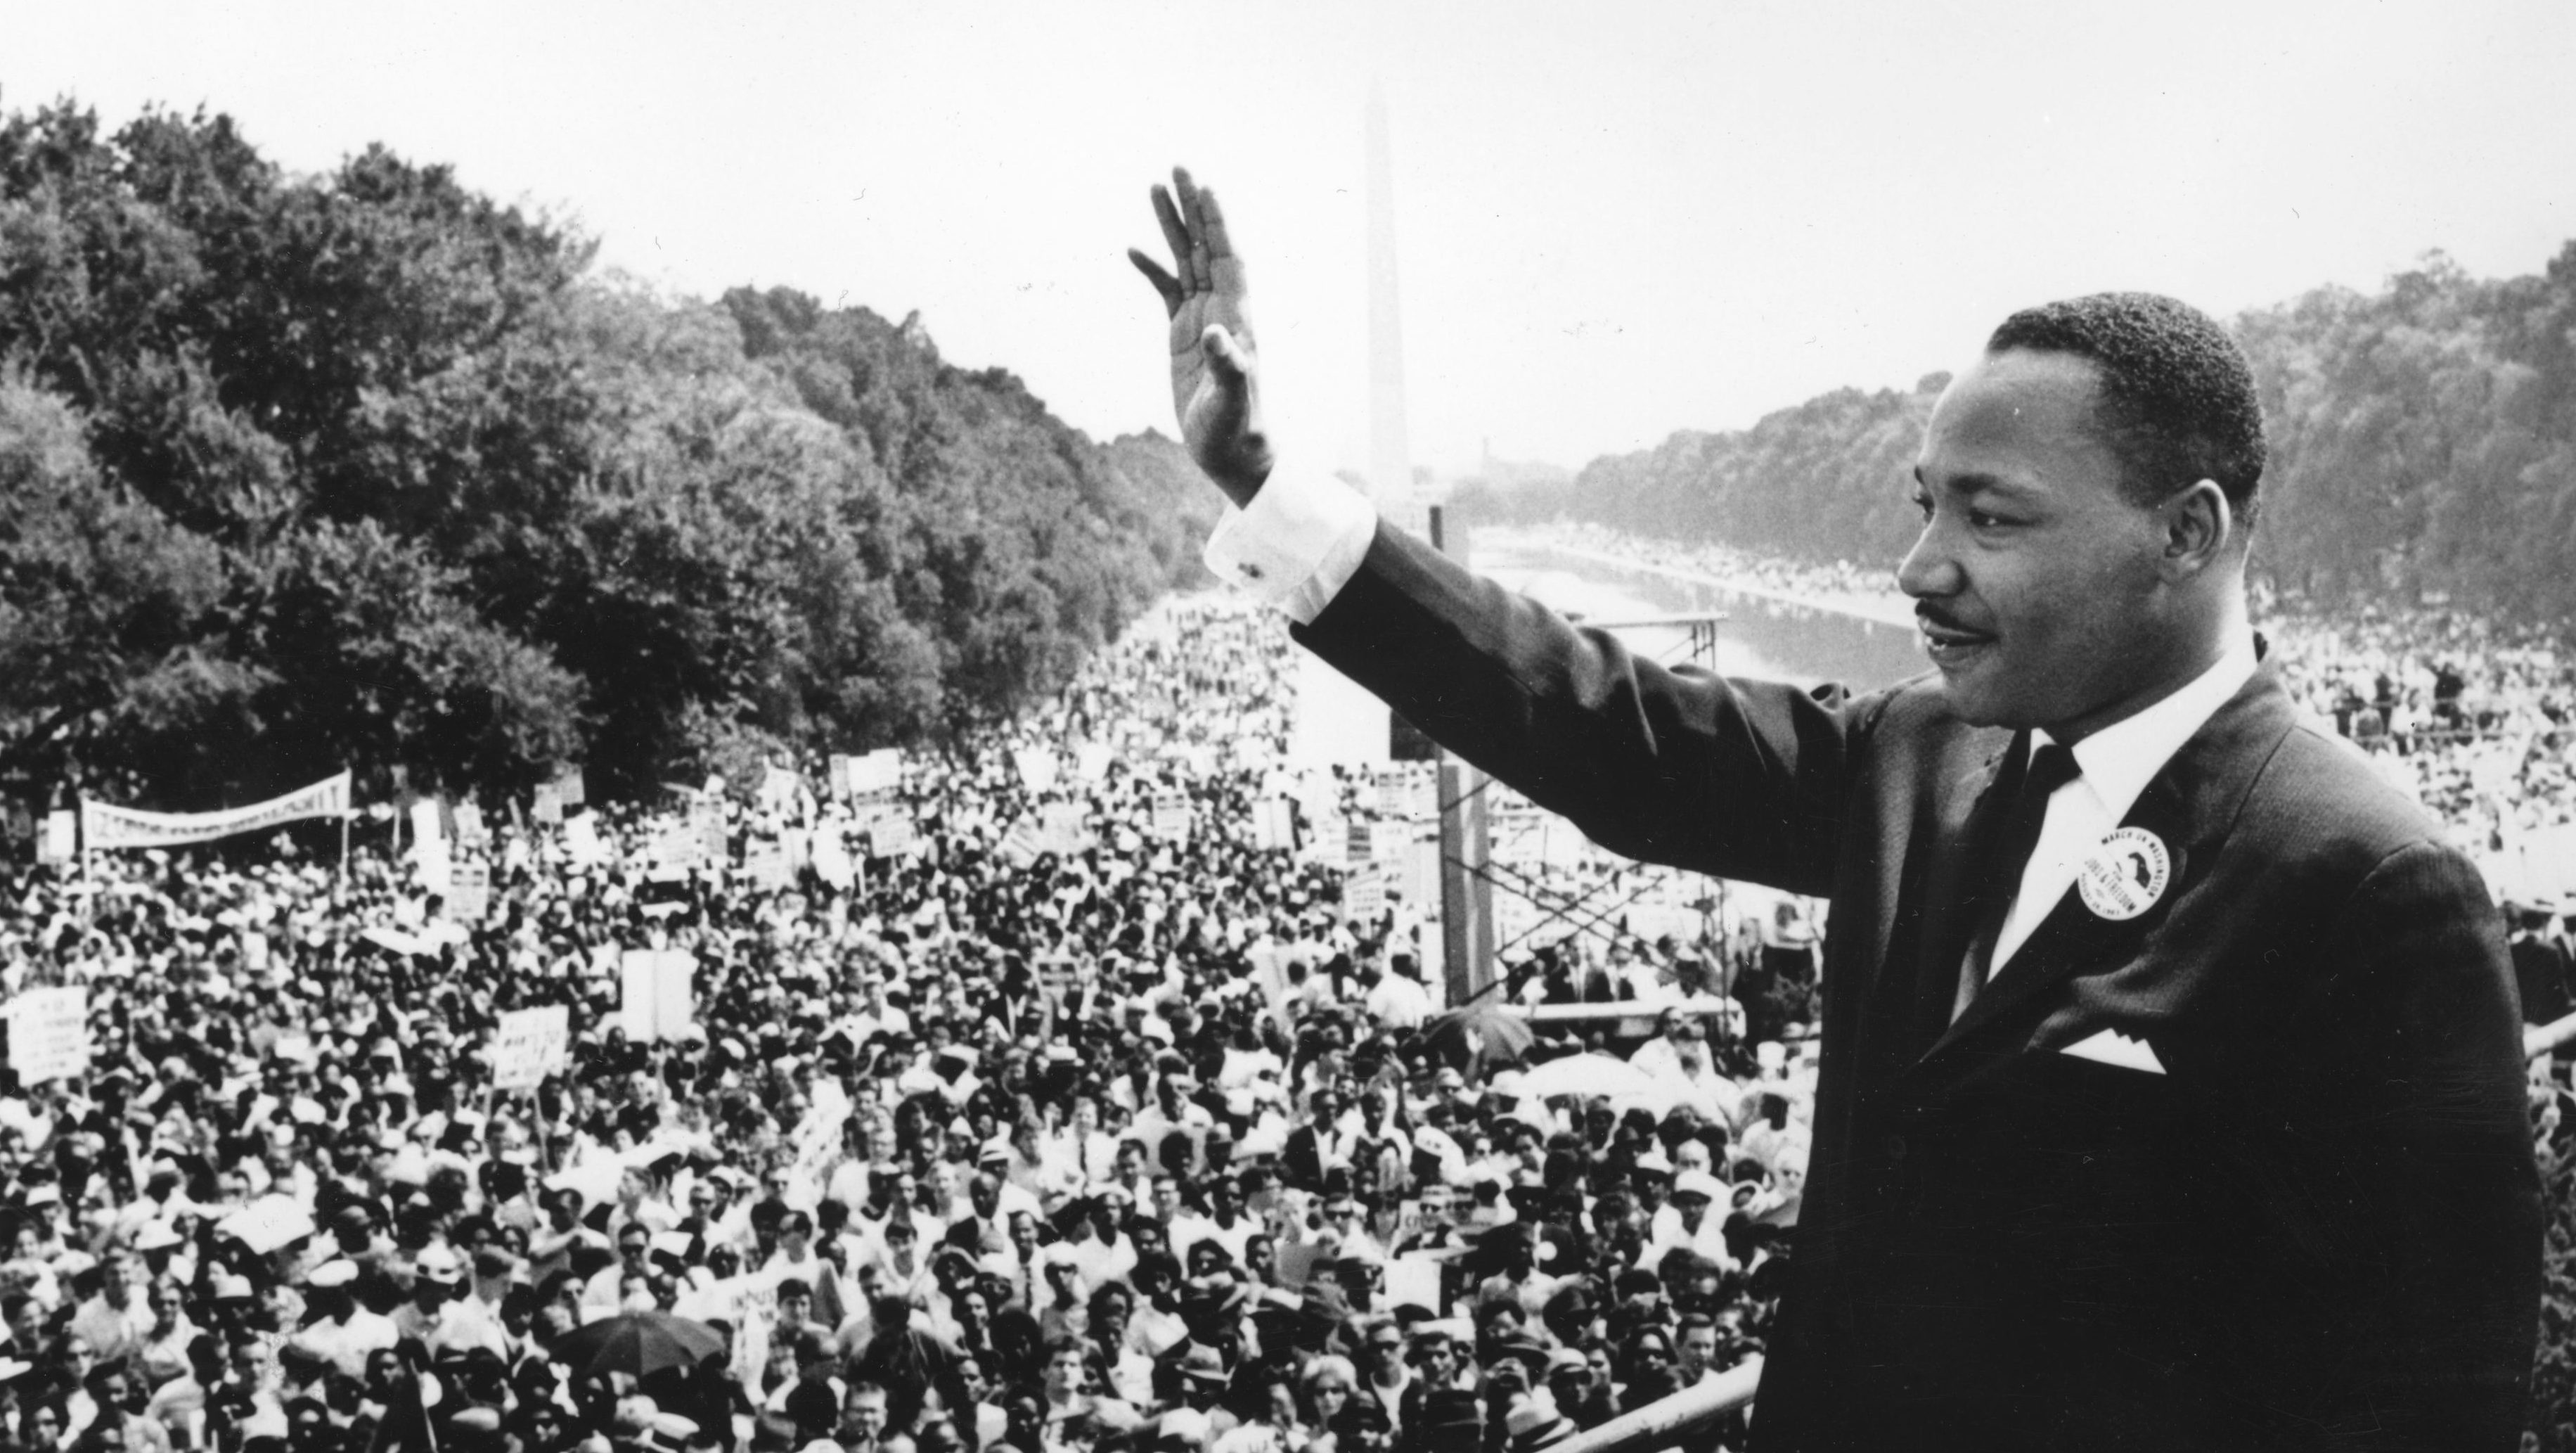 Martin Luther King Jr. Day Parade 2020 in Atlanta Key Details